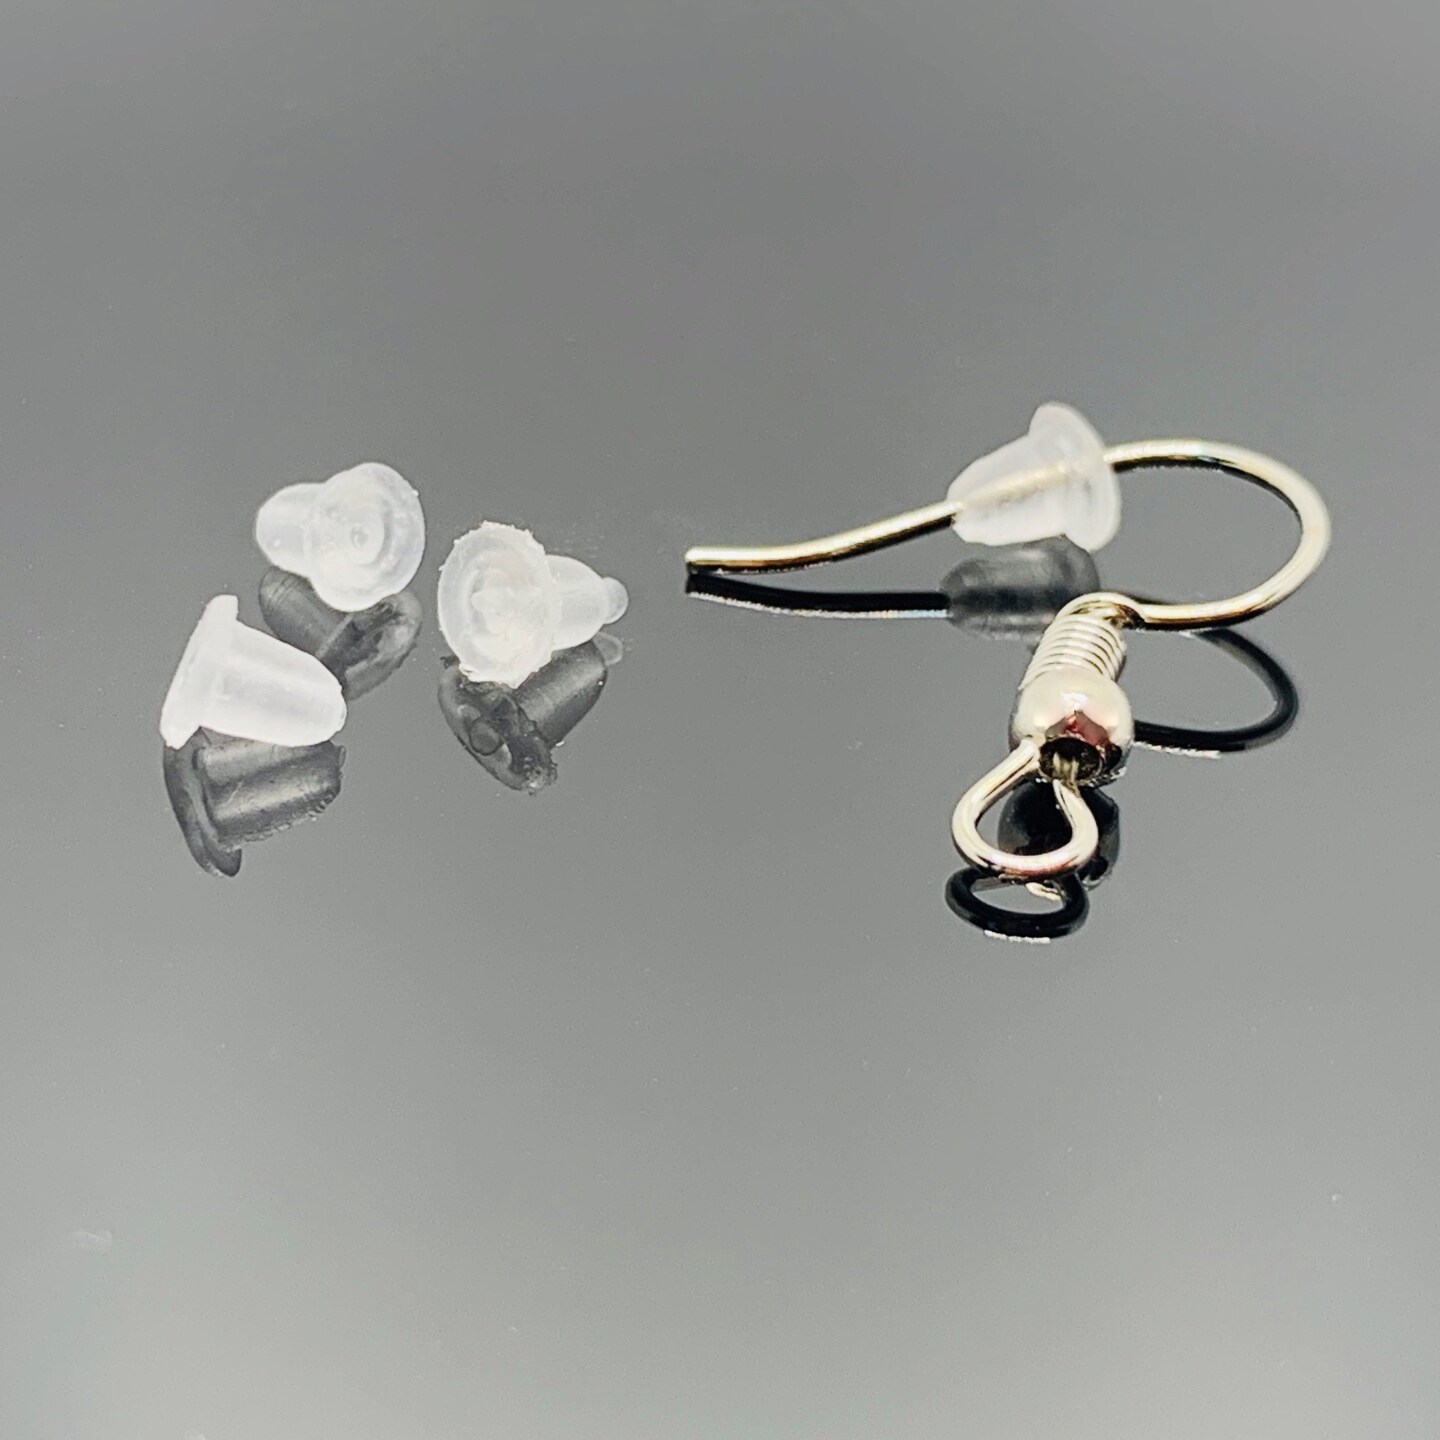 100/500pcs Silicone Rubber Earring Back Stoppers For Stud Earrings Ear  Stopper Diy Jewelry Making Earring Findings Accessories Hk